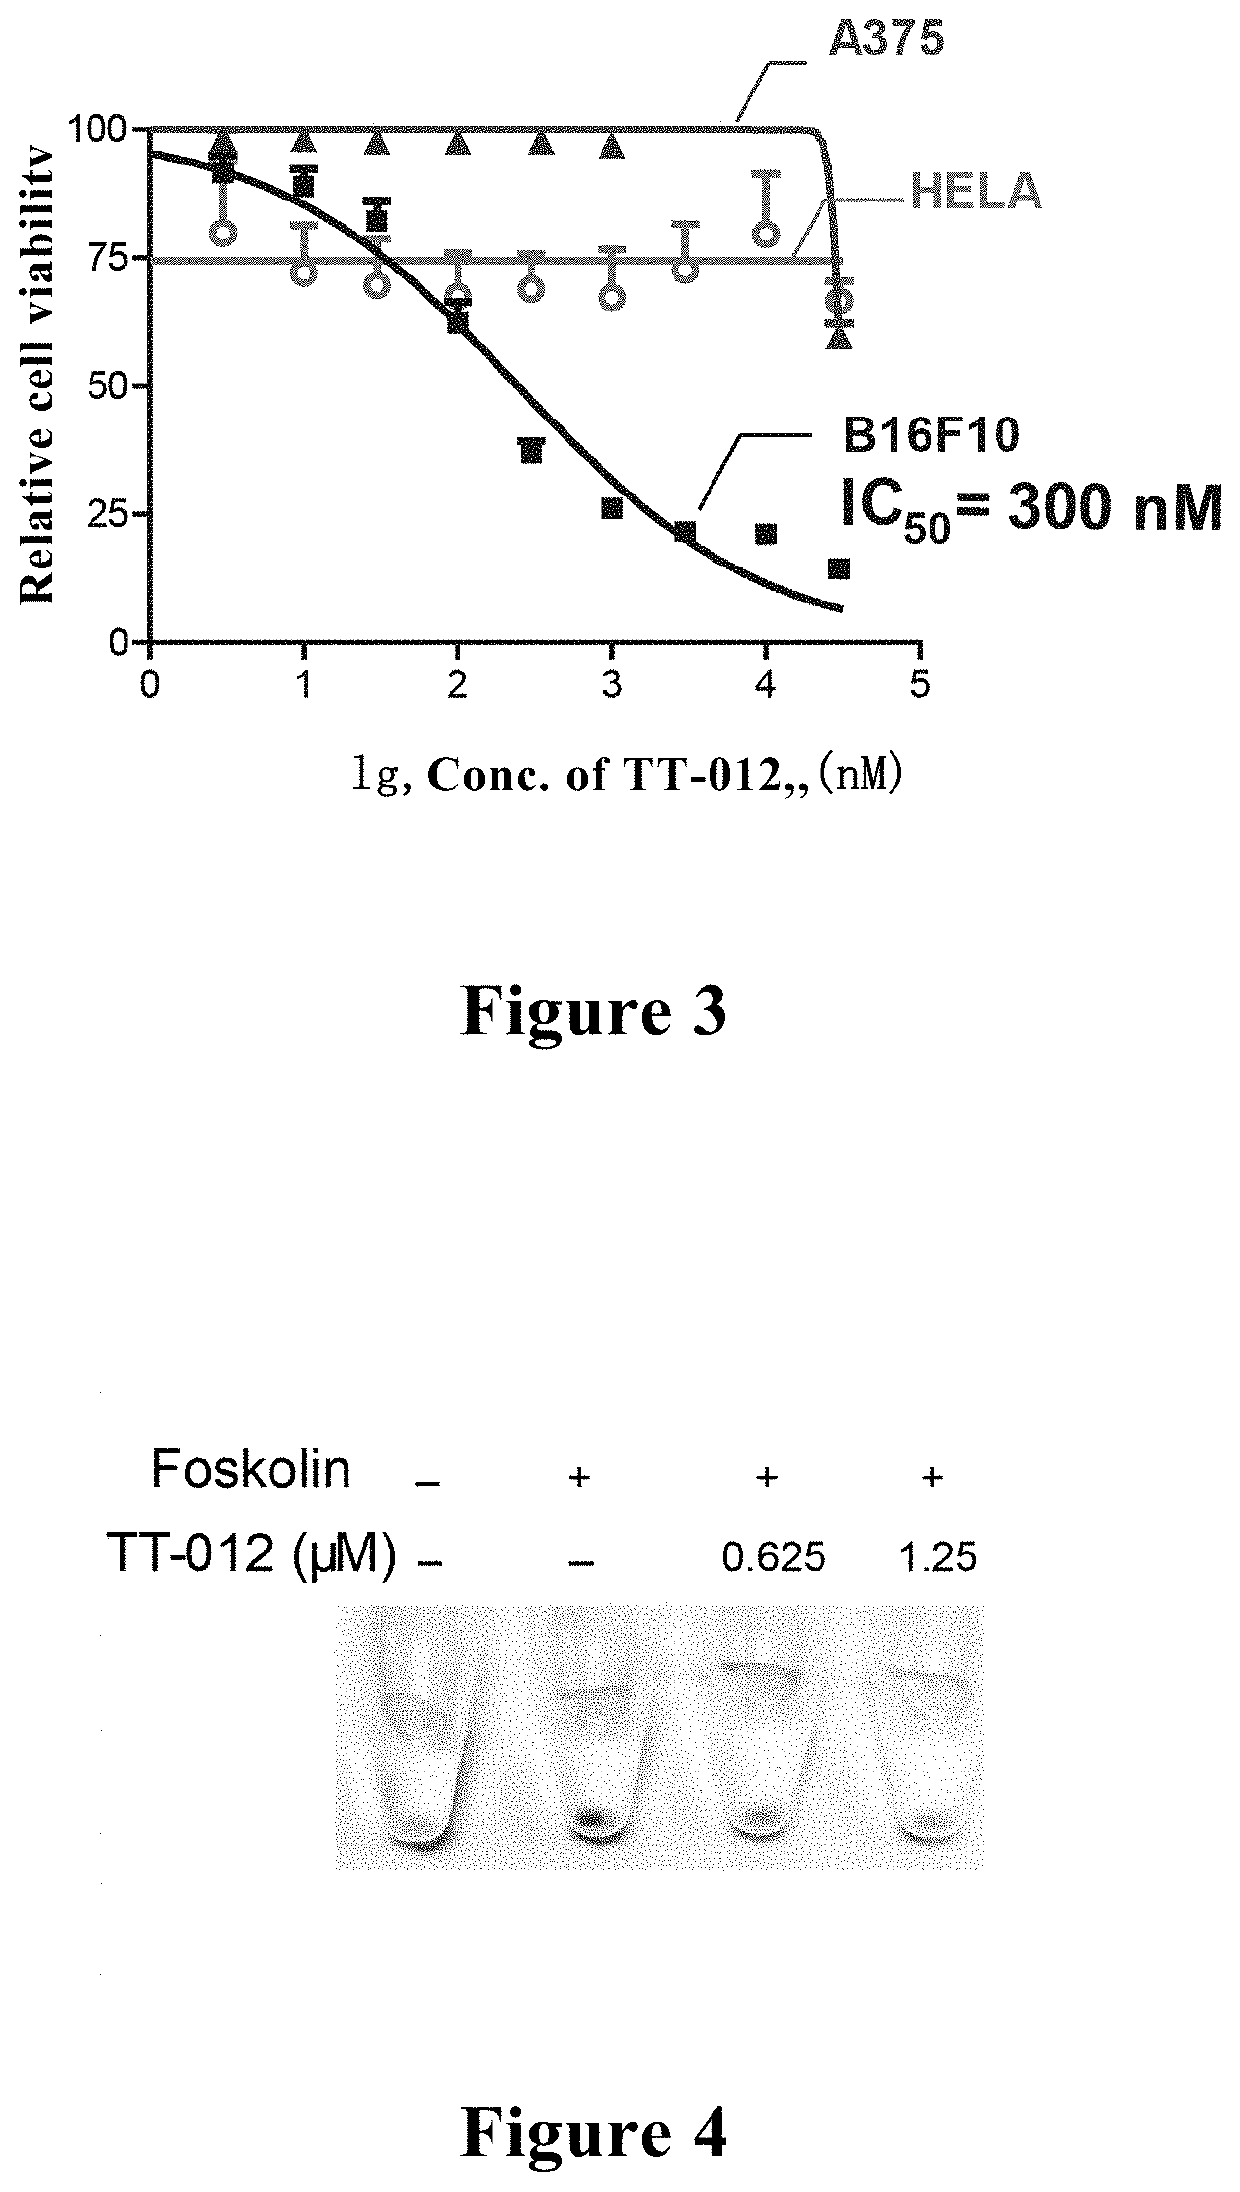 Use of aromatic ring drug in inhibiting key transcription factor of malignant melanoma